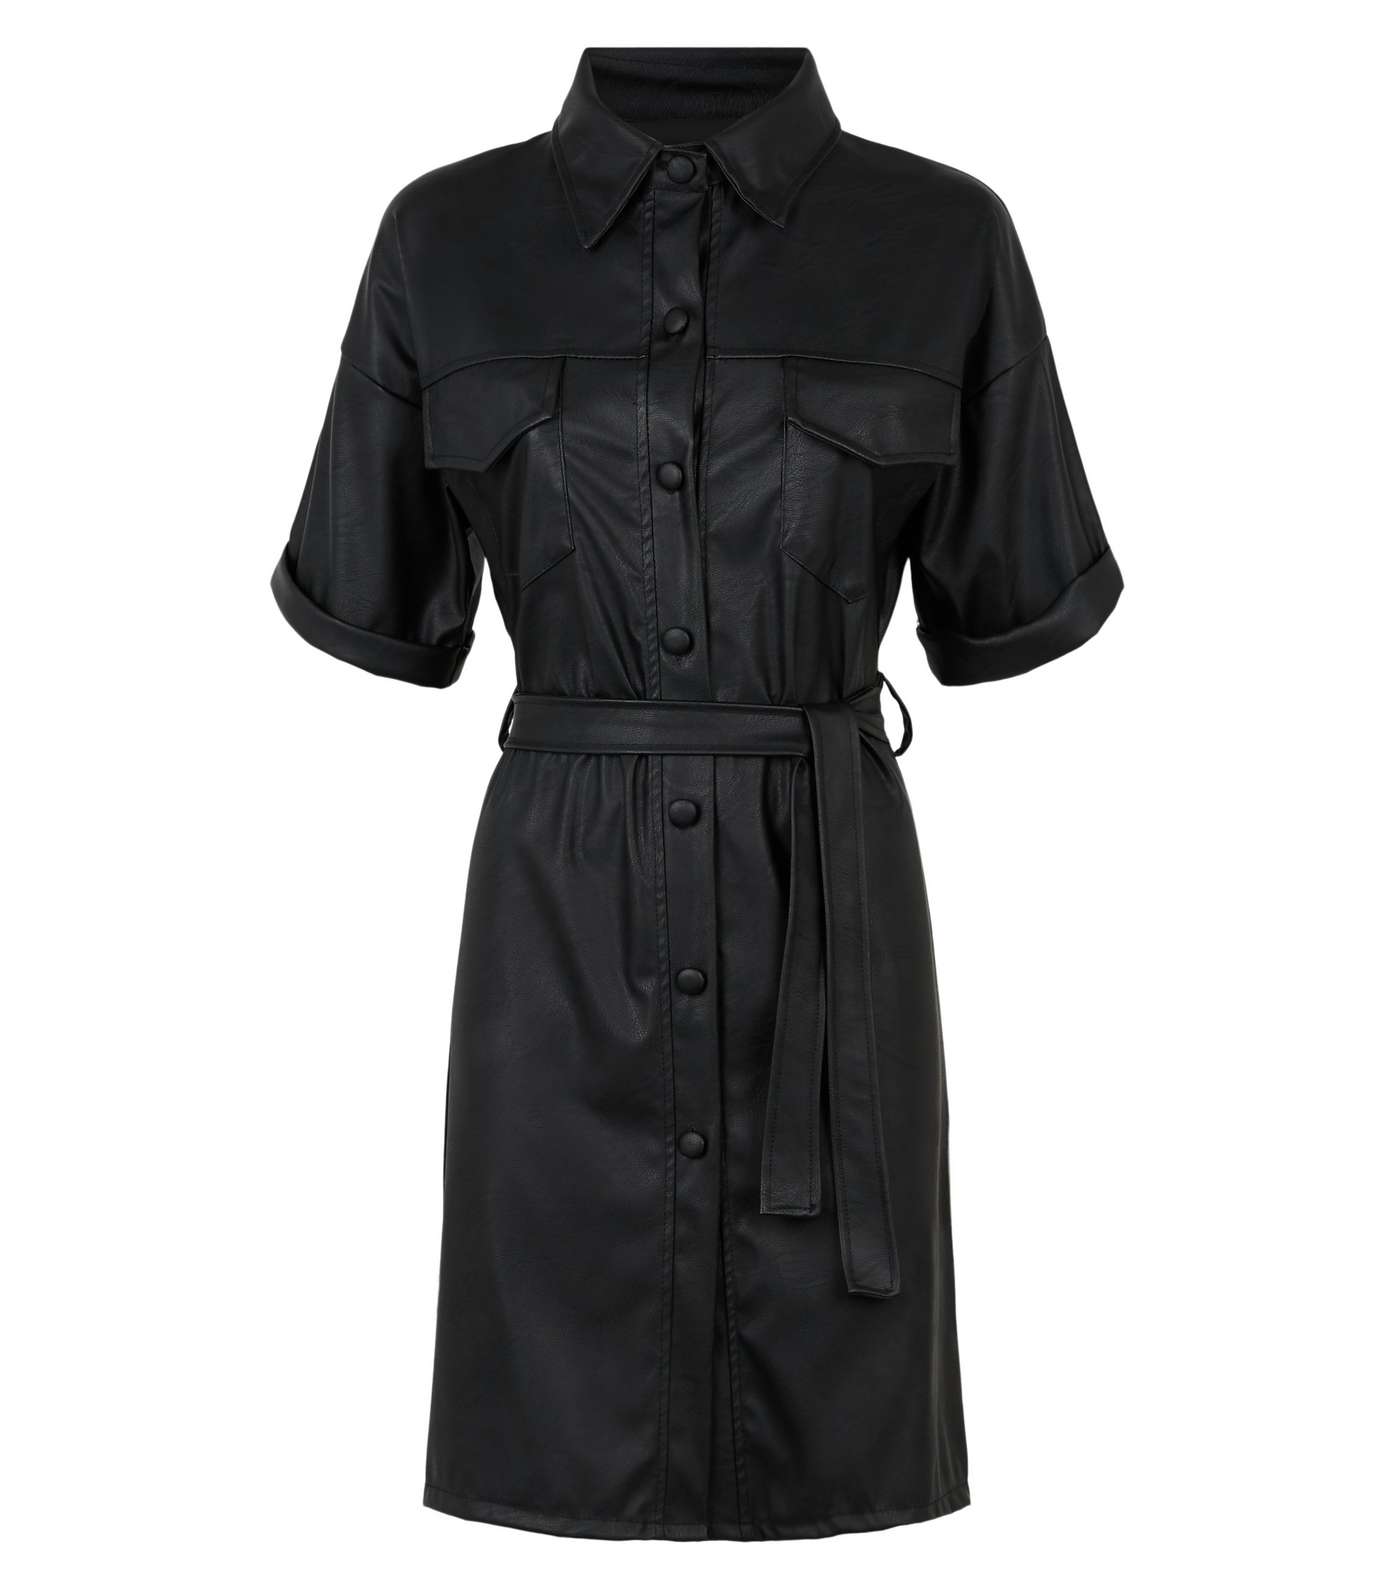 Cameo Rose Black Leather-Look Shirt Dress Image 4